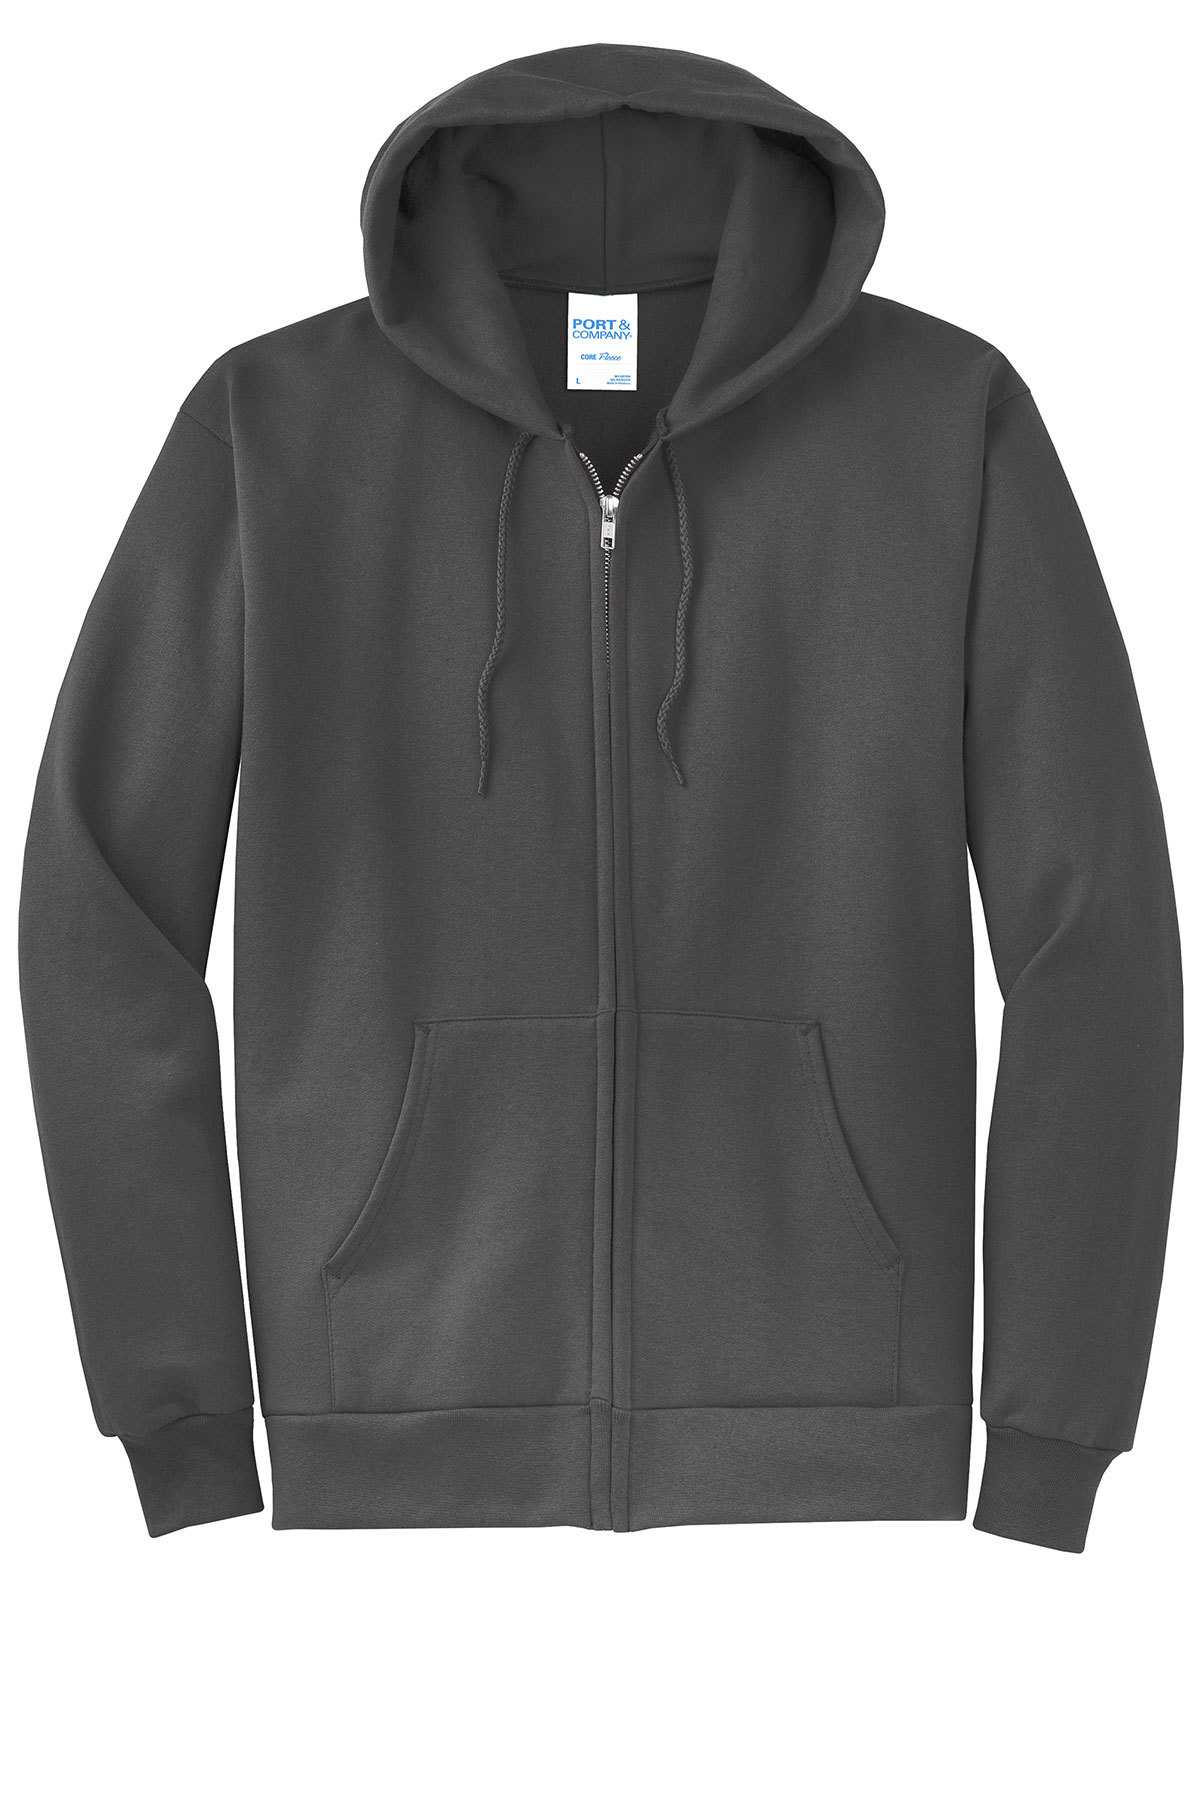 Port & Company® Core Fleece Full-Zip Hooded Sweatshirt | Port & Company ...